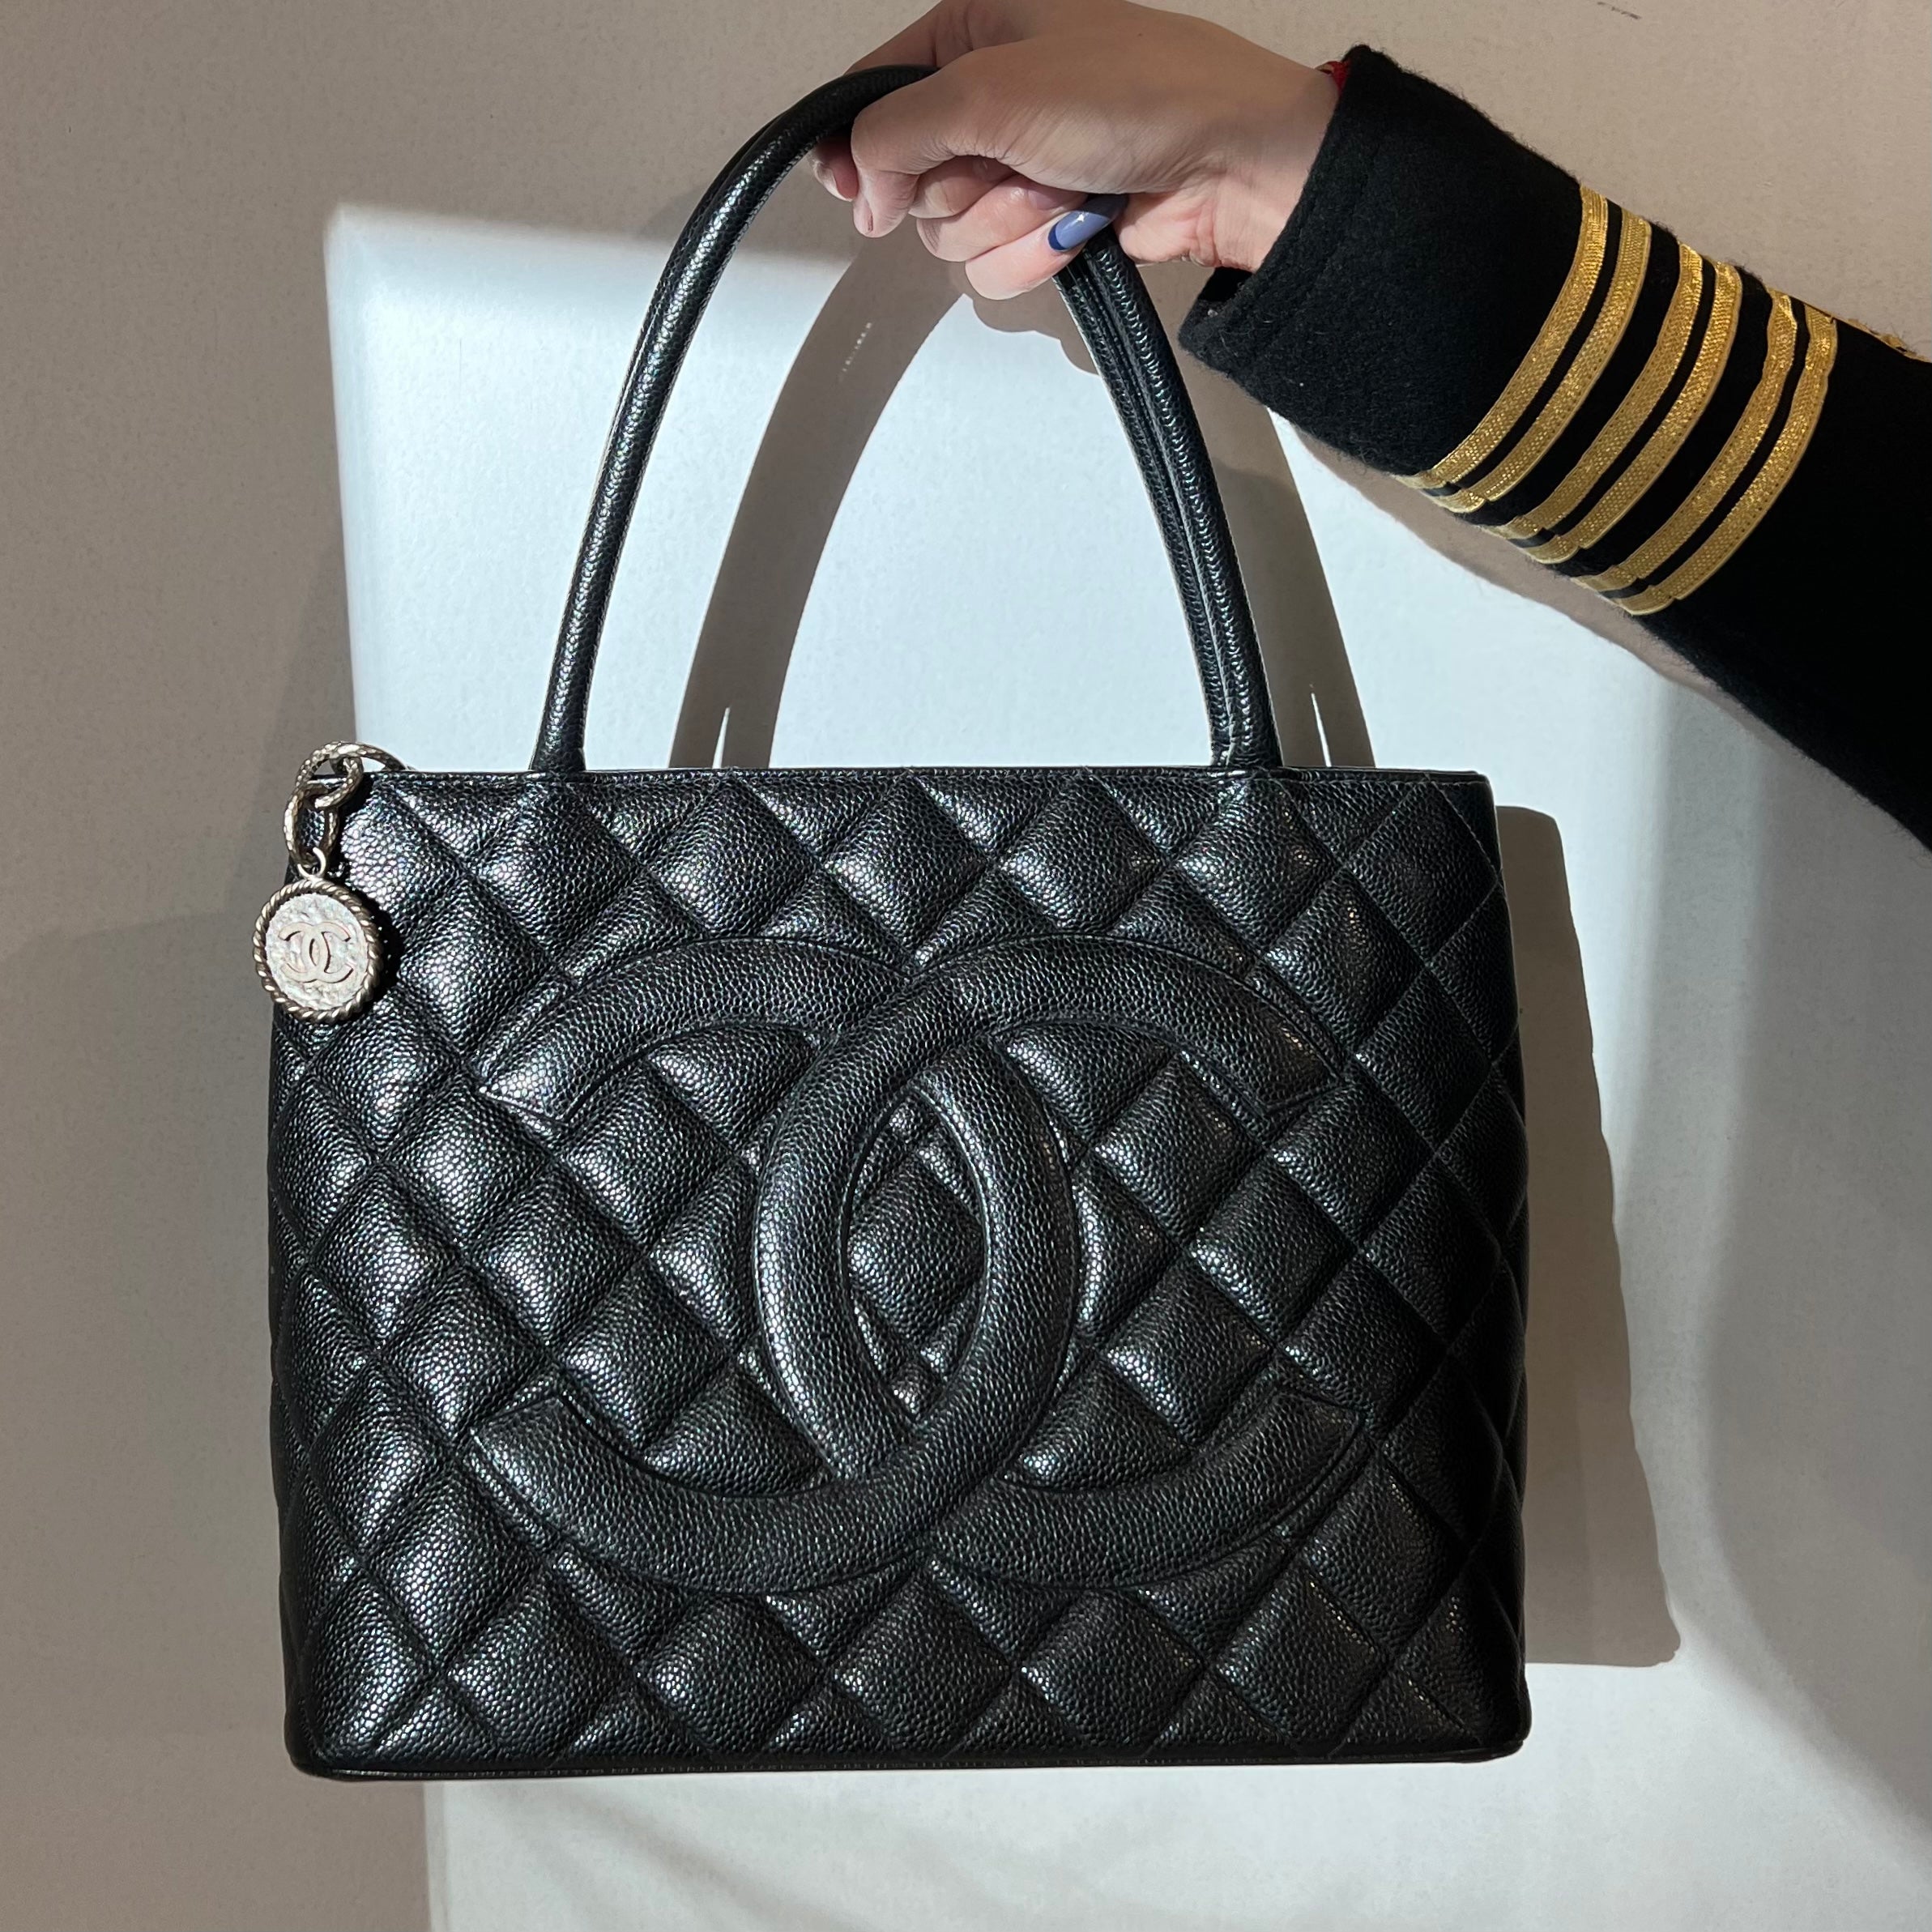 Chanel Black Caviar Medallion Tote Bag as Seen as on Lauren 